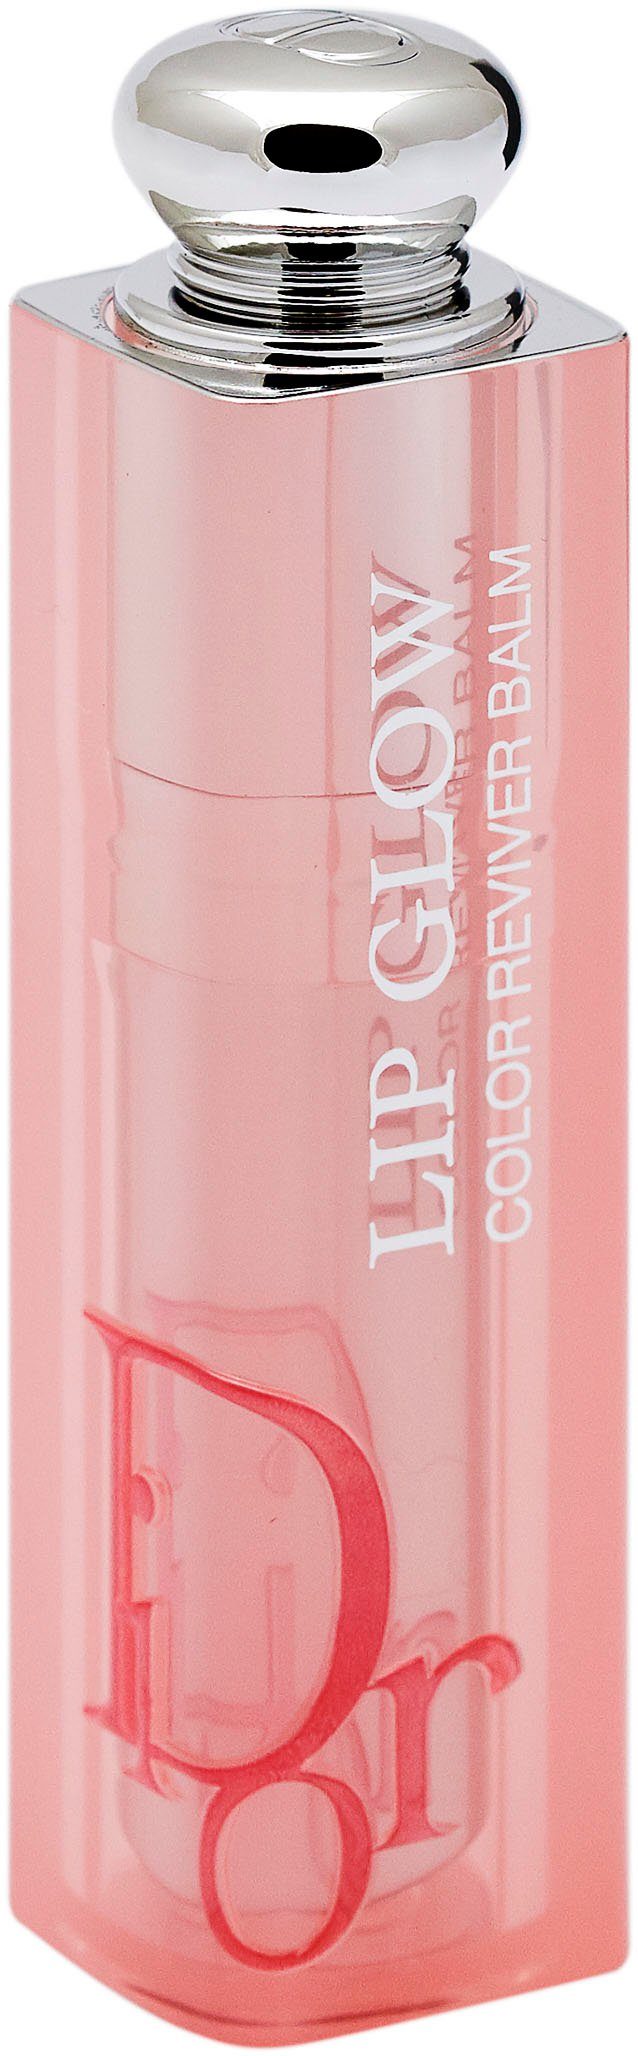 Dior Lippenbalsam Dior Addict Lip 001 Pink Glow